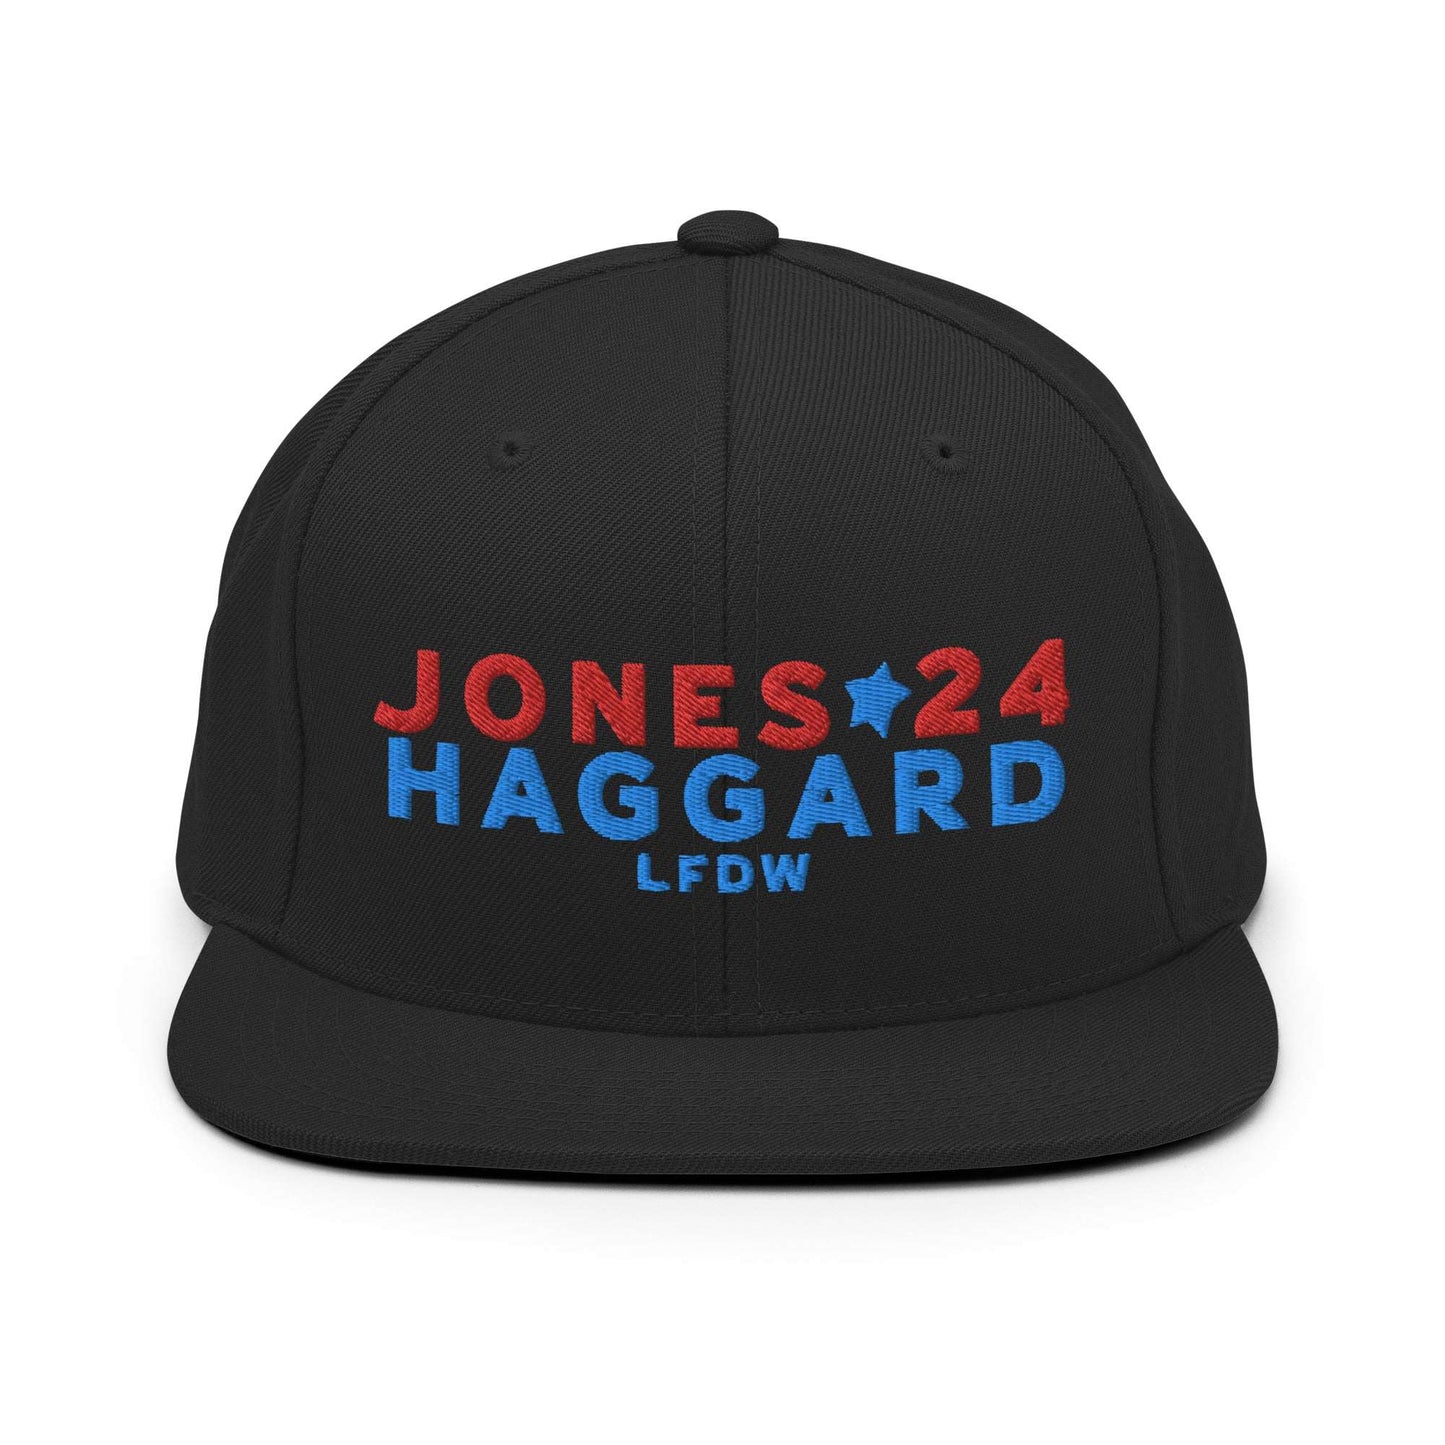 Jones/Haggard '24 Snapback Hat